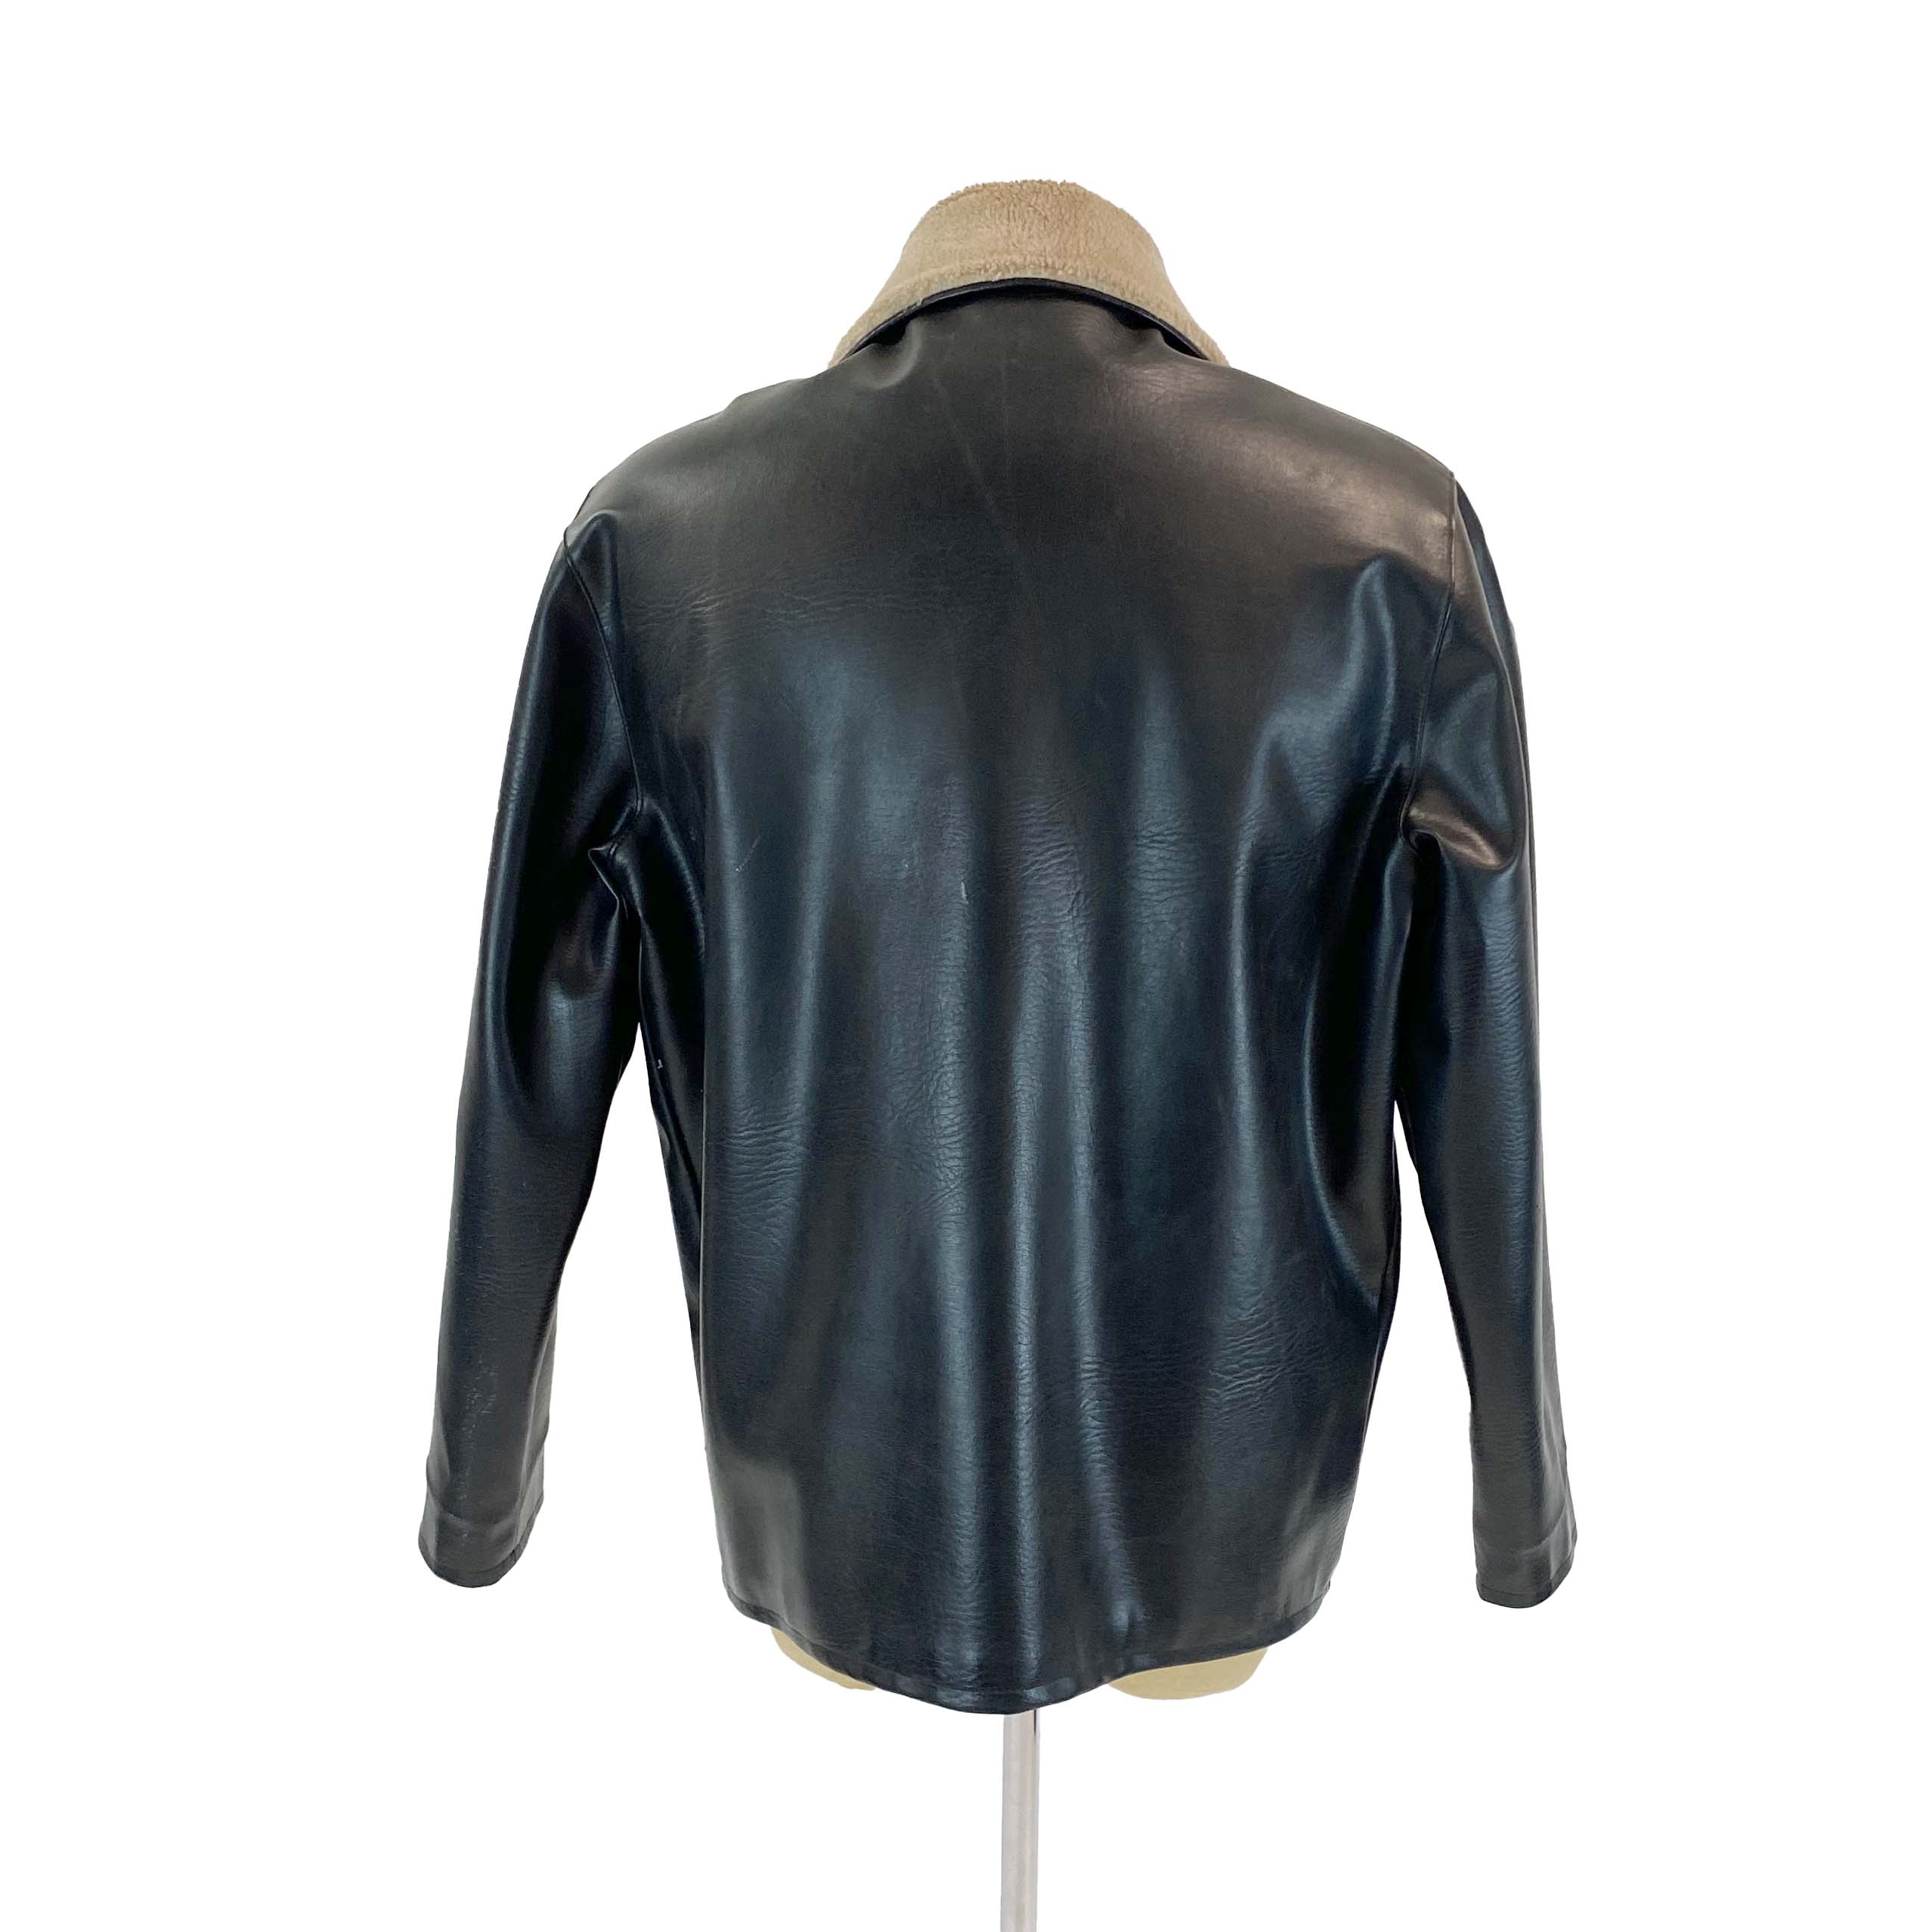 BENTELY Leather Fur Trim Bomber Jacket